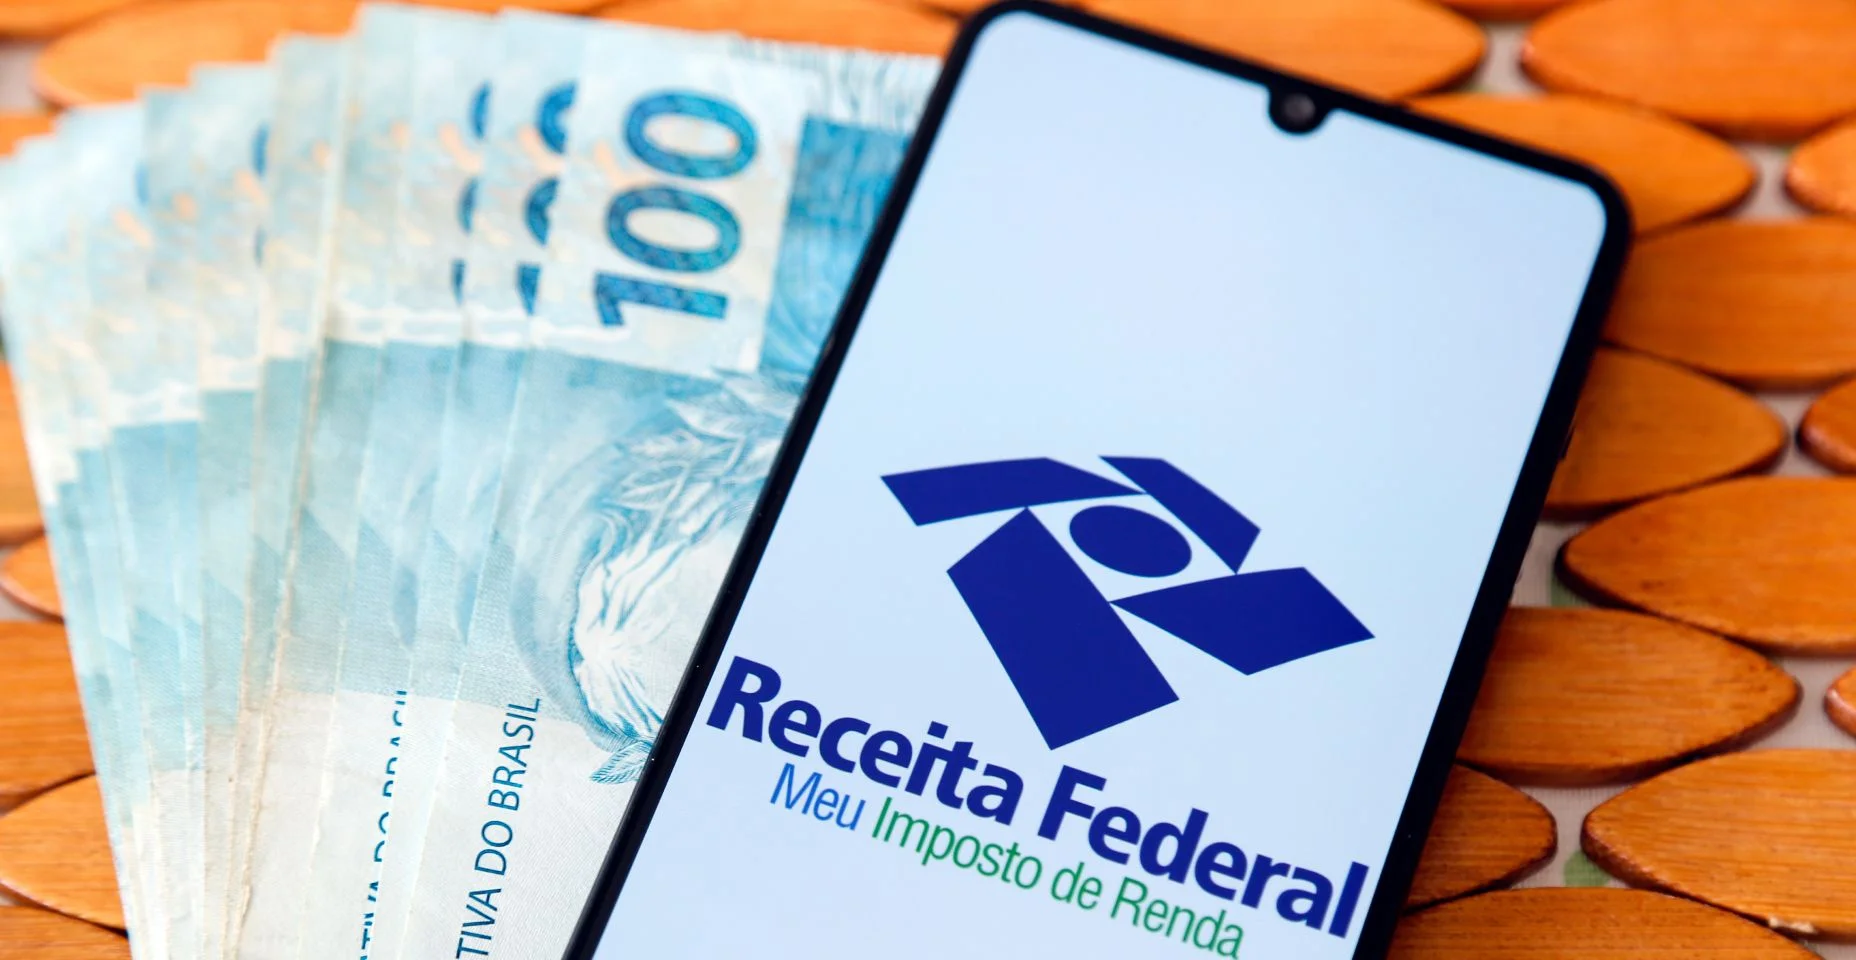 Logotipo da Receita Federal na tela do celular e notas de dinheiro brasileiro